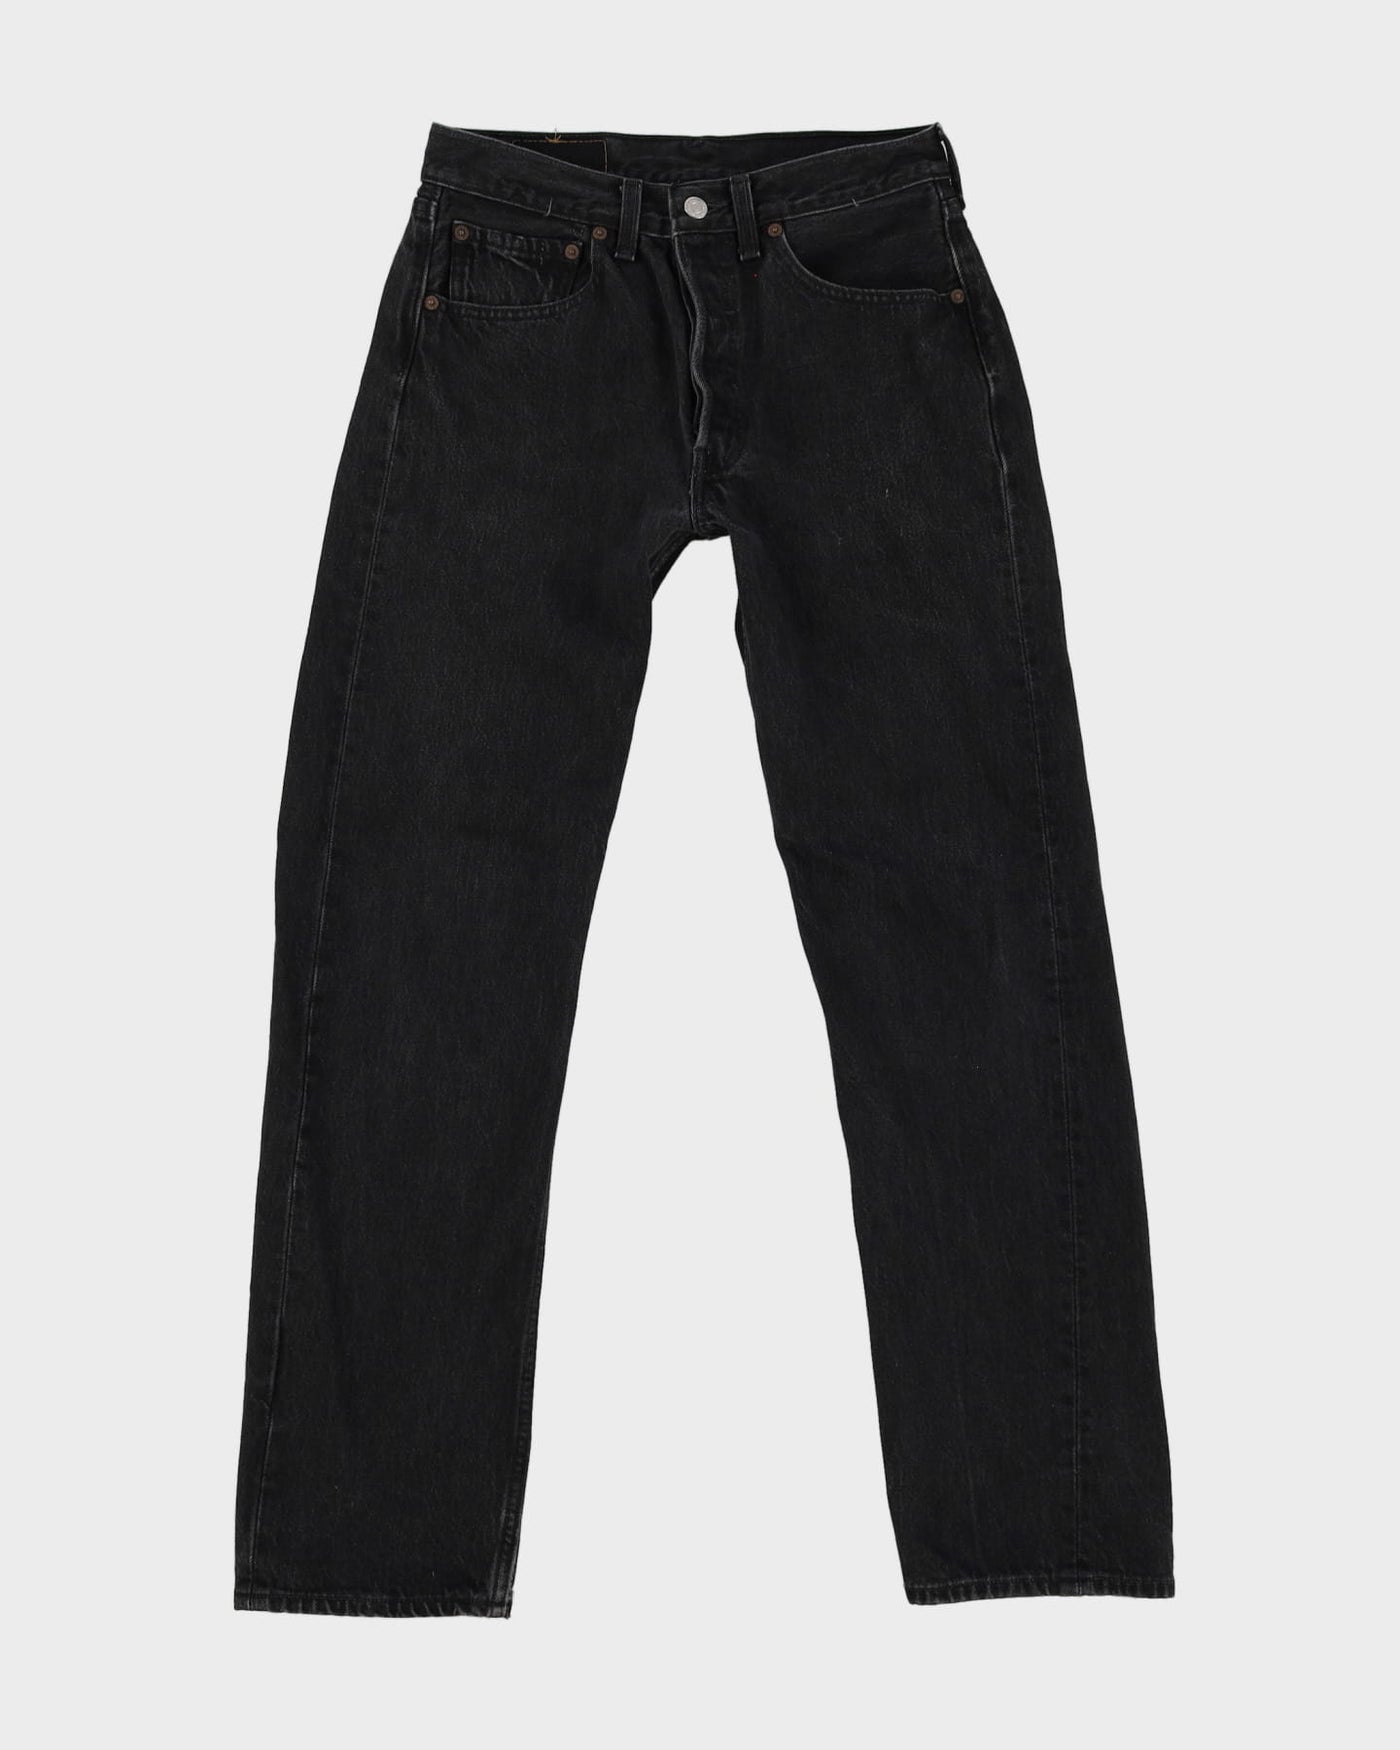 Vintage 90s Levi's 501 Dark Wash Black Jeans - W29 L31